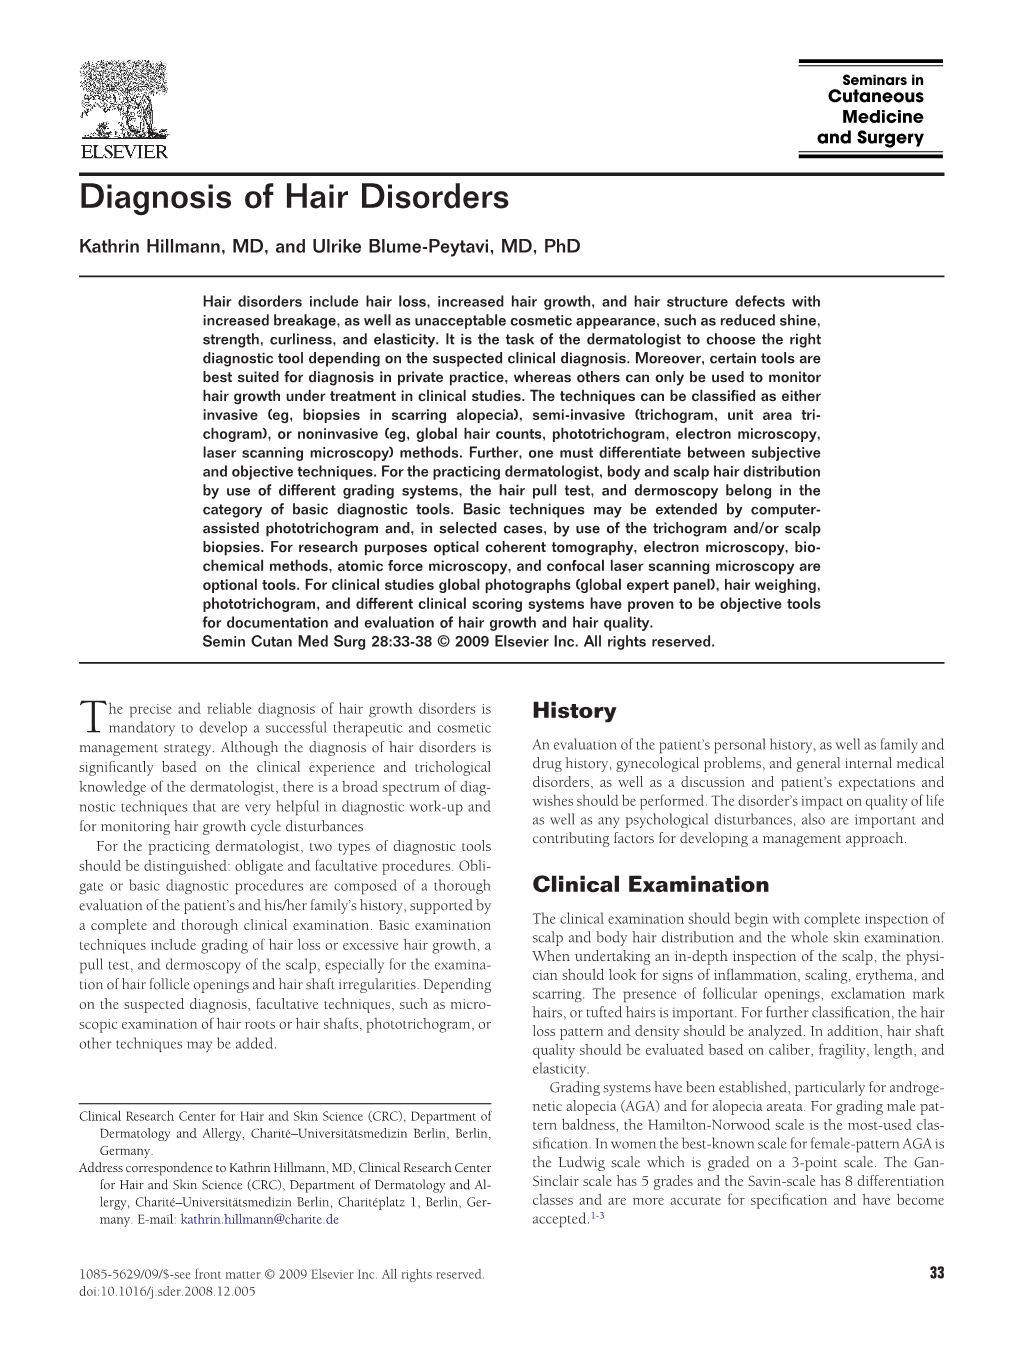 Diagnosis of Hair Disorders